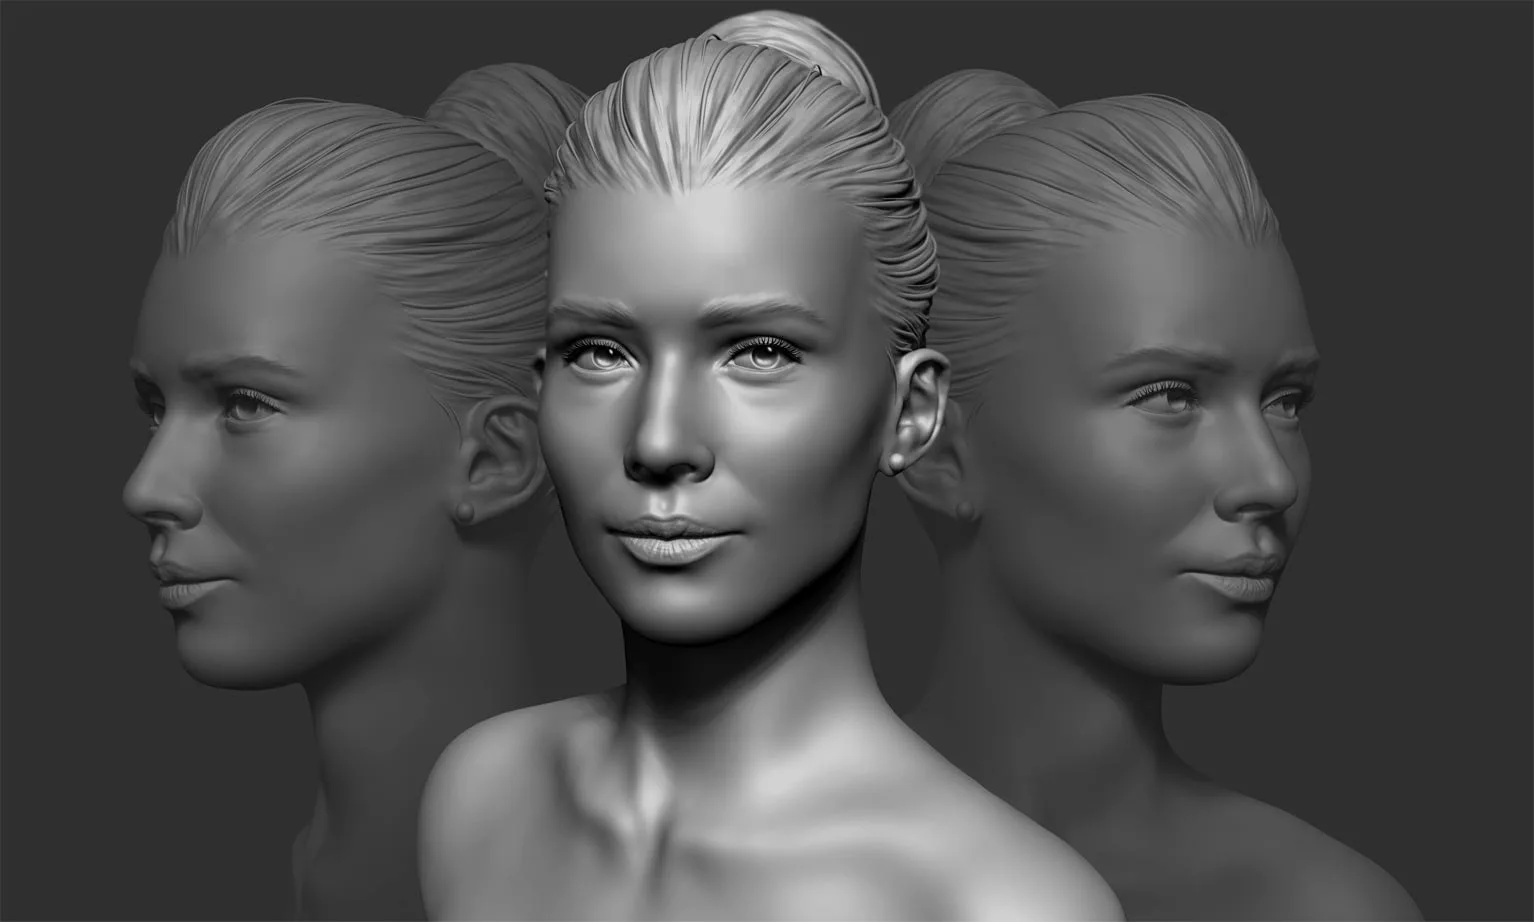 Sculpting a Realistic Female Face in ZBrush